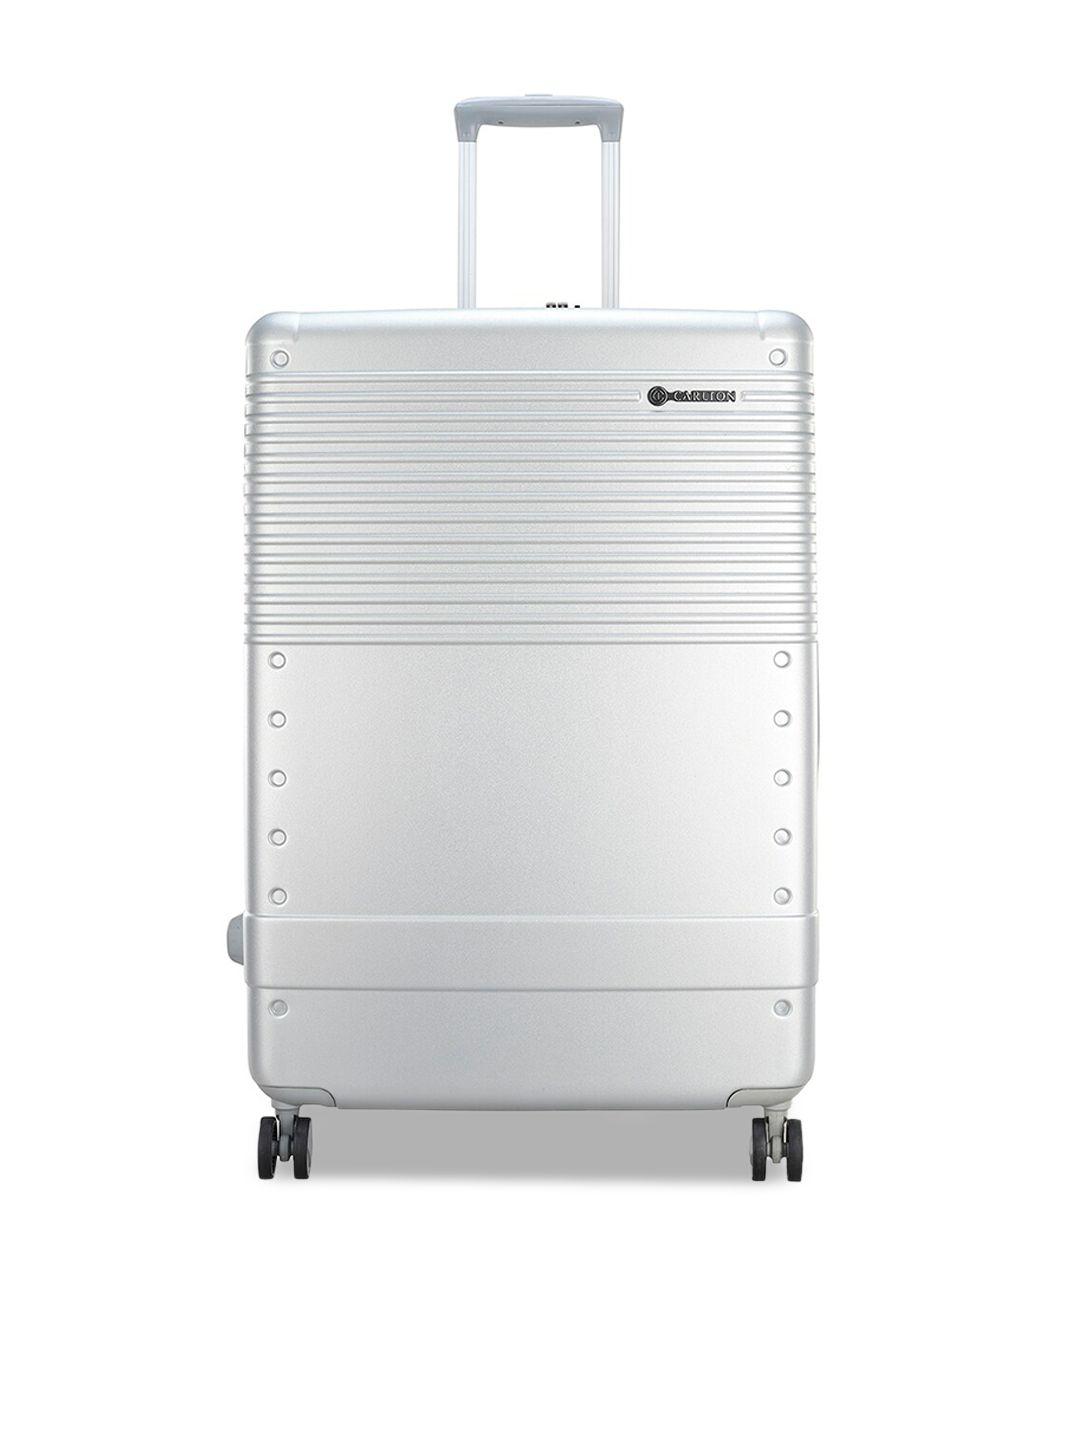 carlton hard-sided large trolley suitcase